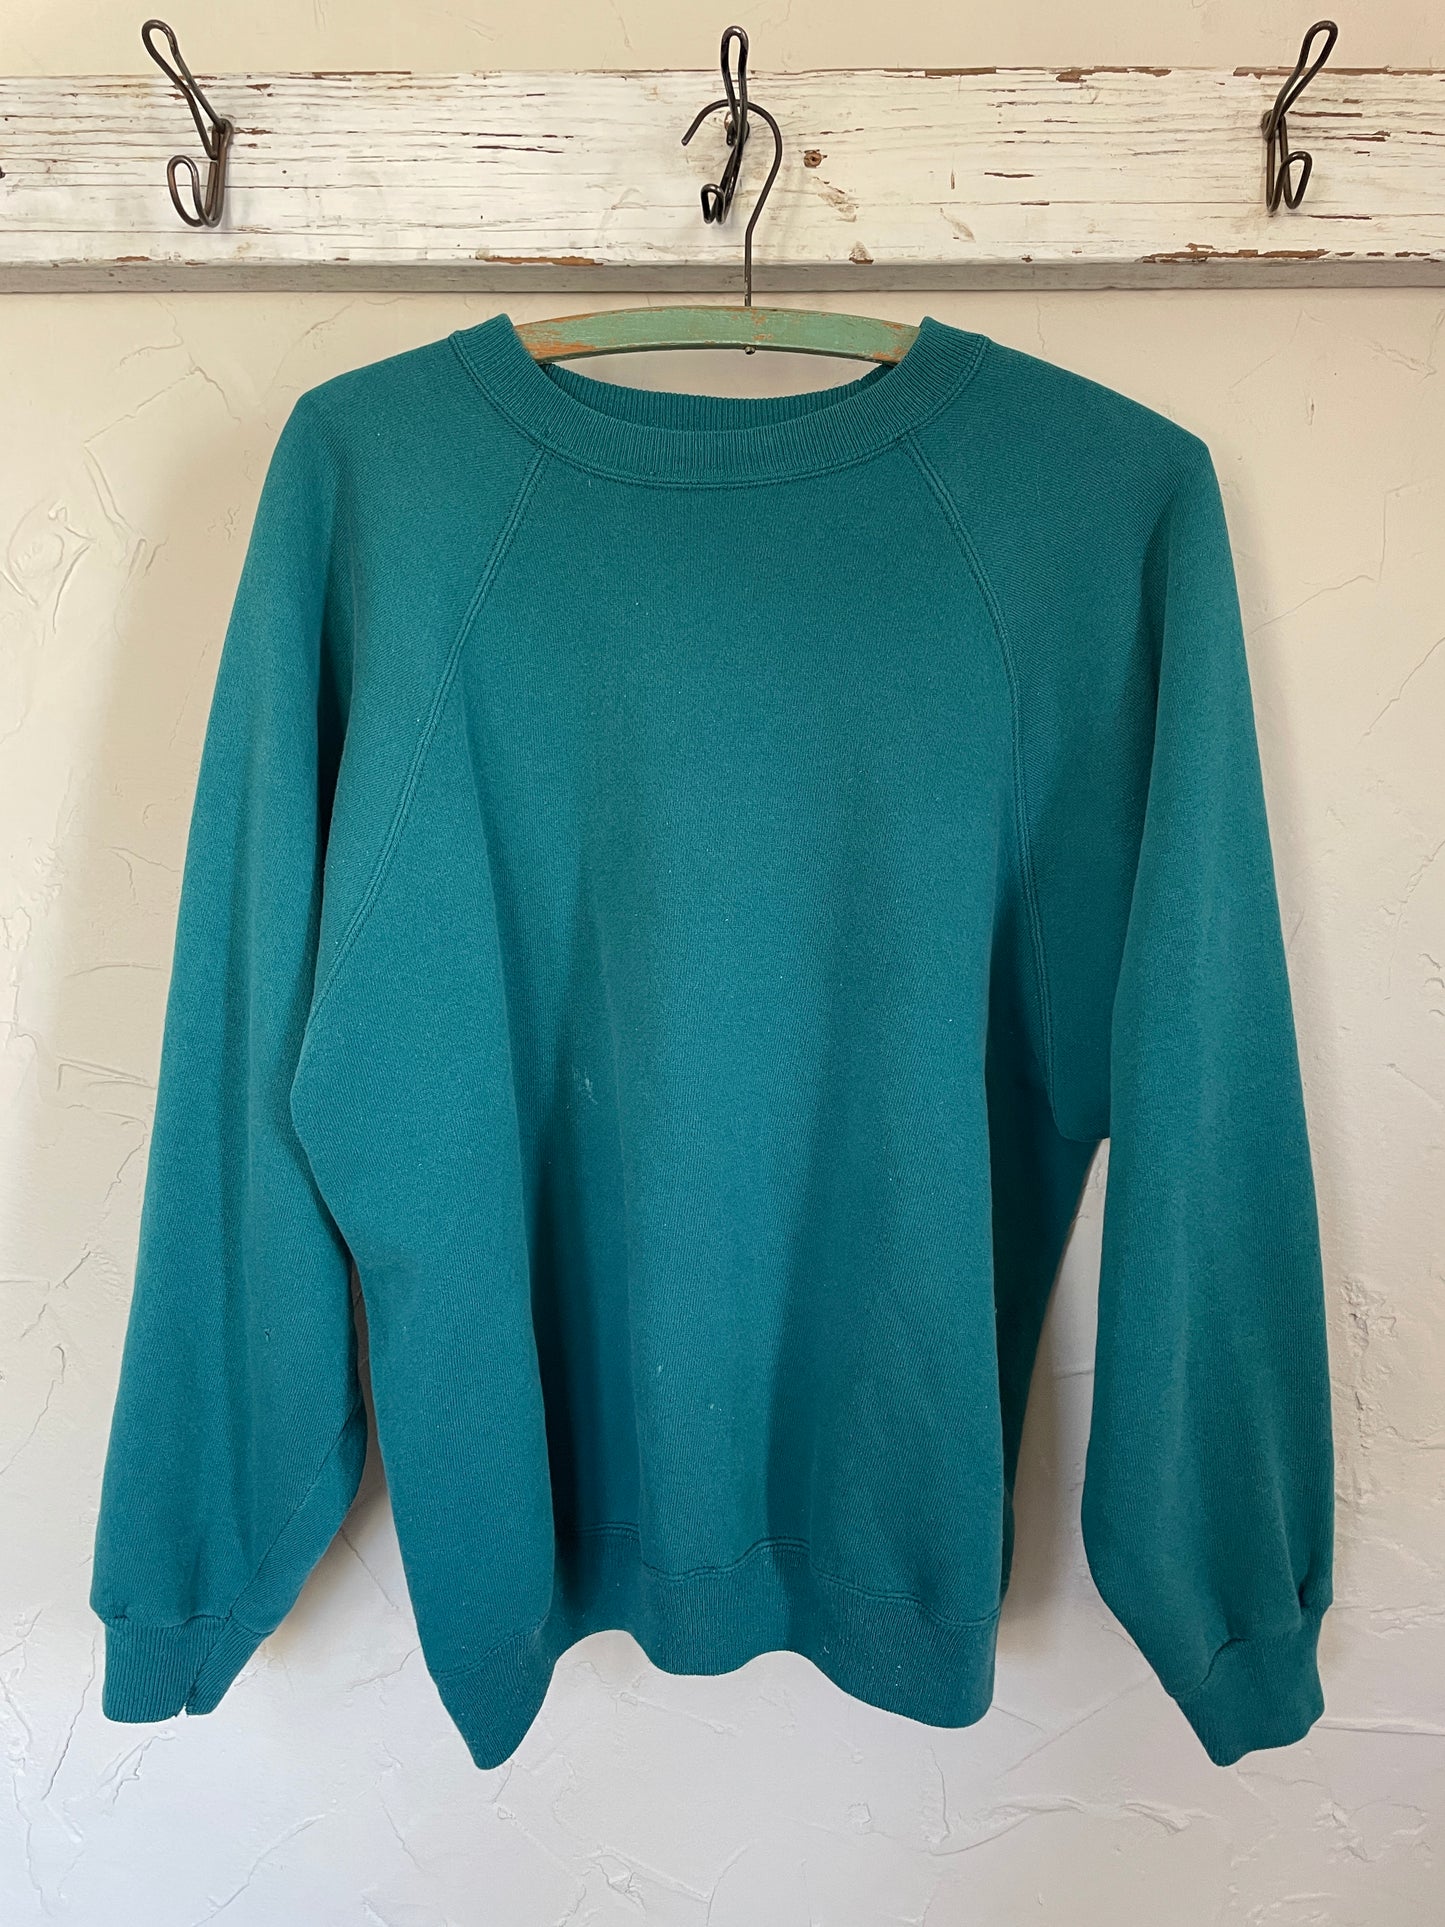 80s/90s Blank Teal Sweatshirt